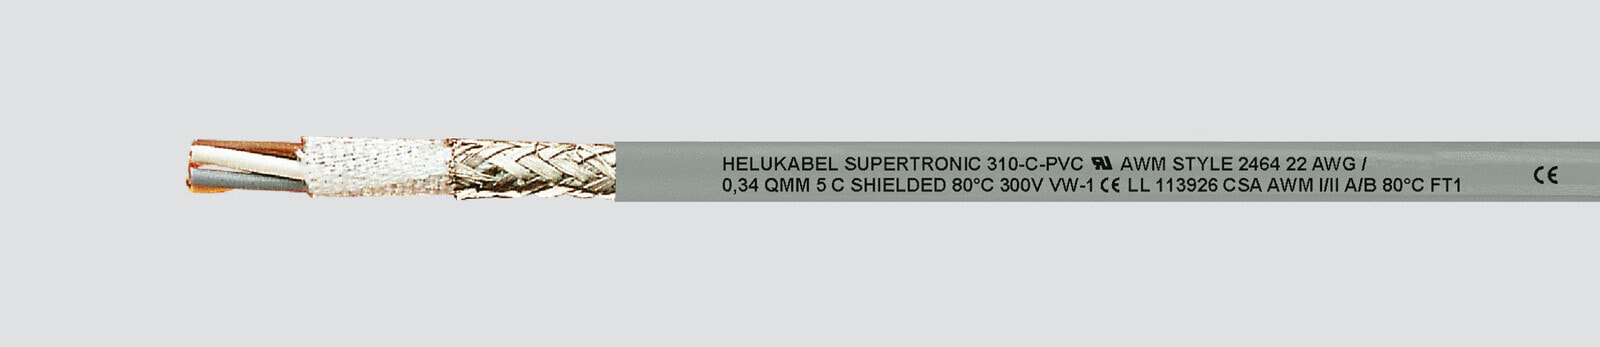 Helukabel 49945 - Medium voltage cable - Grey - Polyvinyl chloride (PVC) - 0.34 mm² - 80 kg/km - -5 - 80 °C